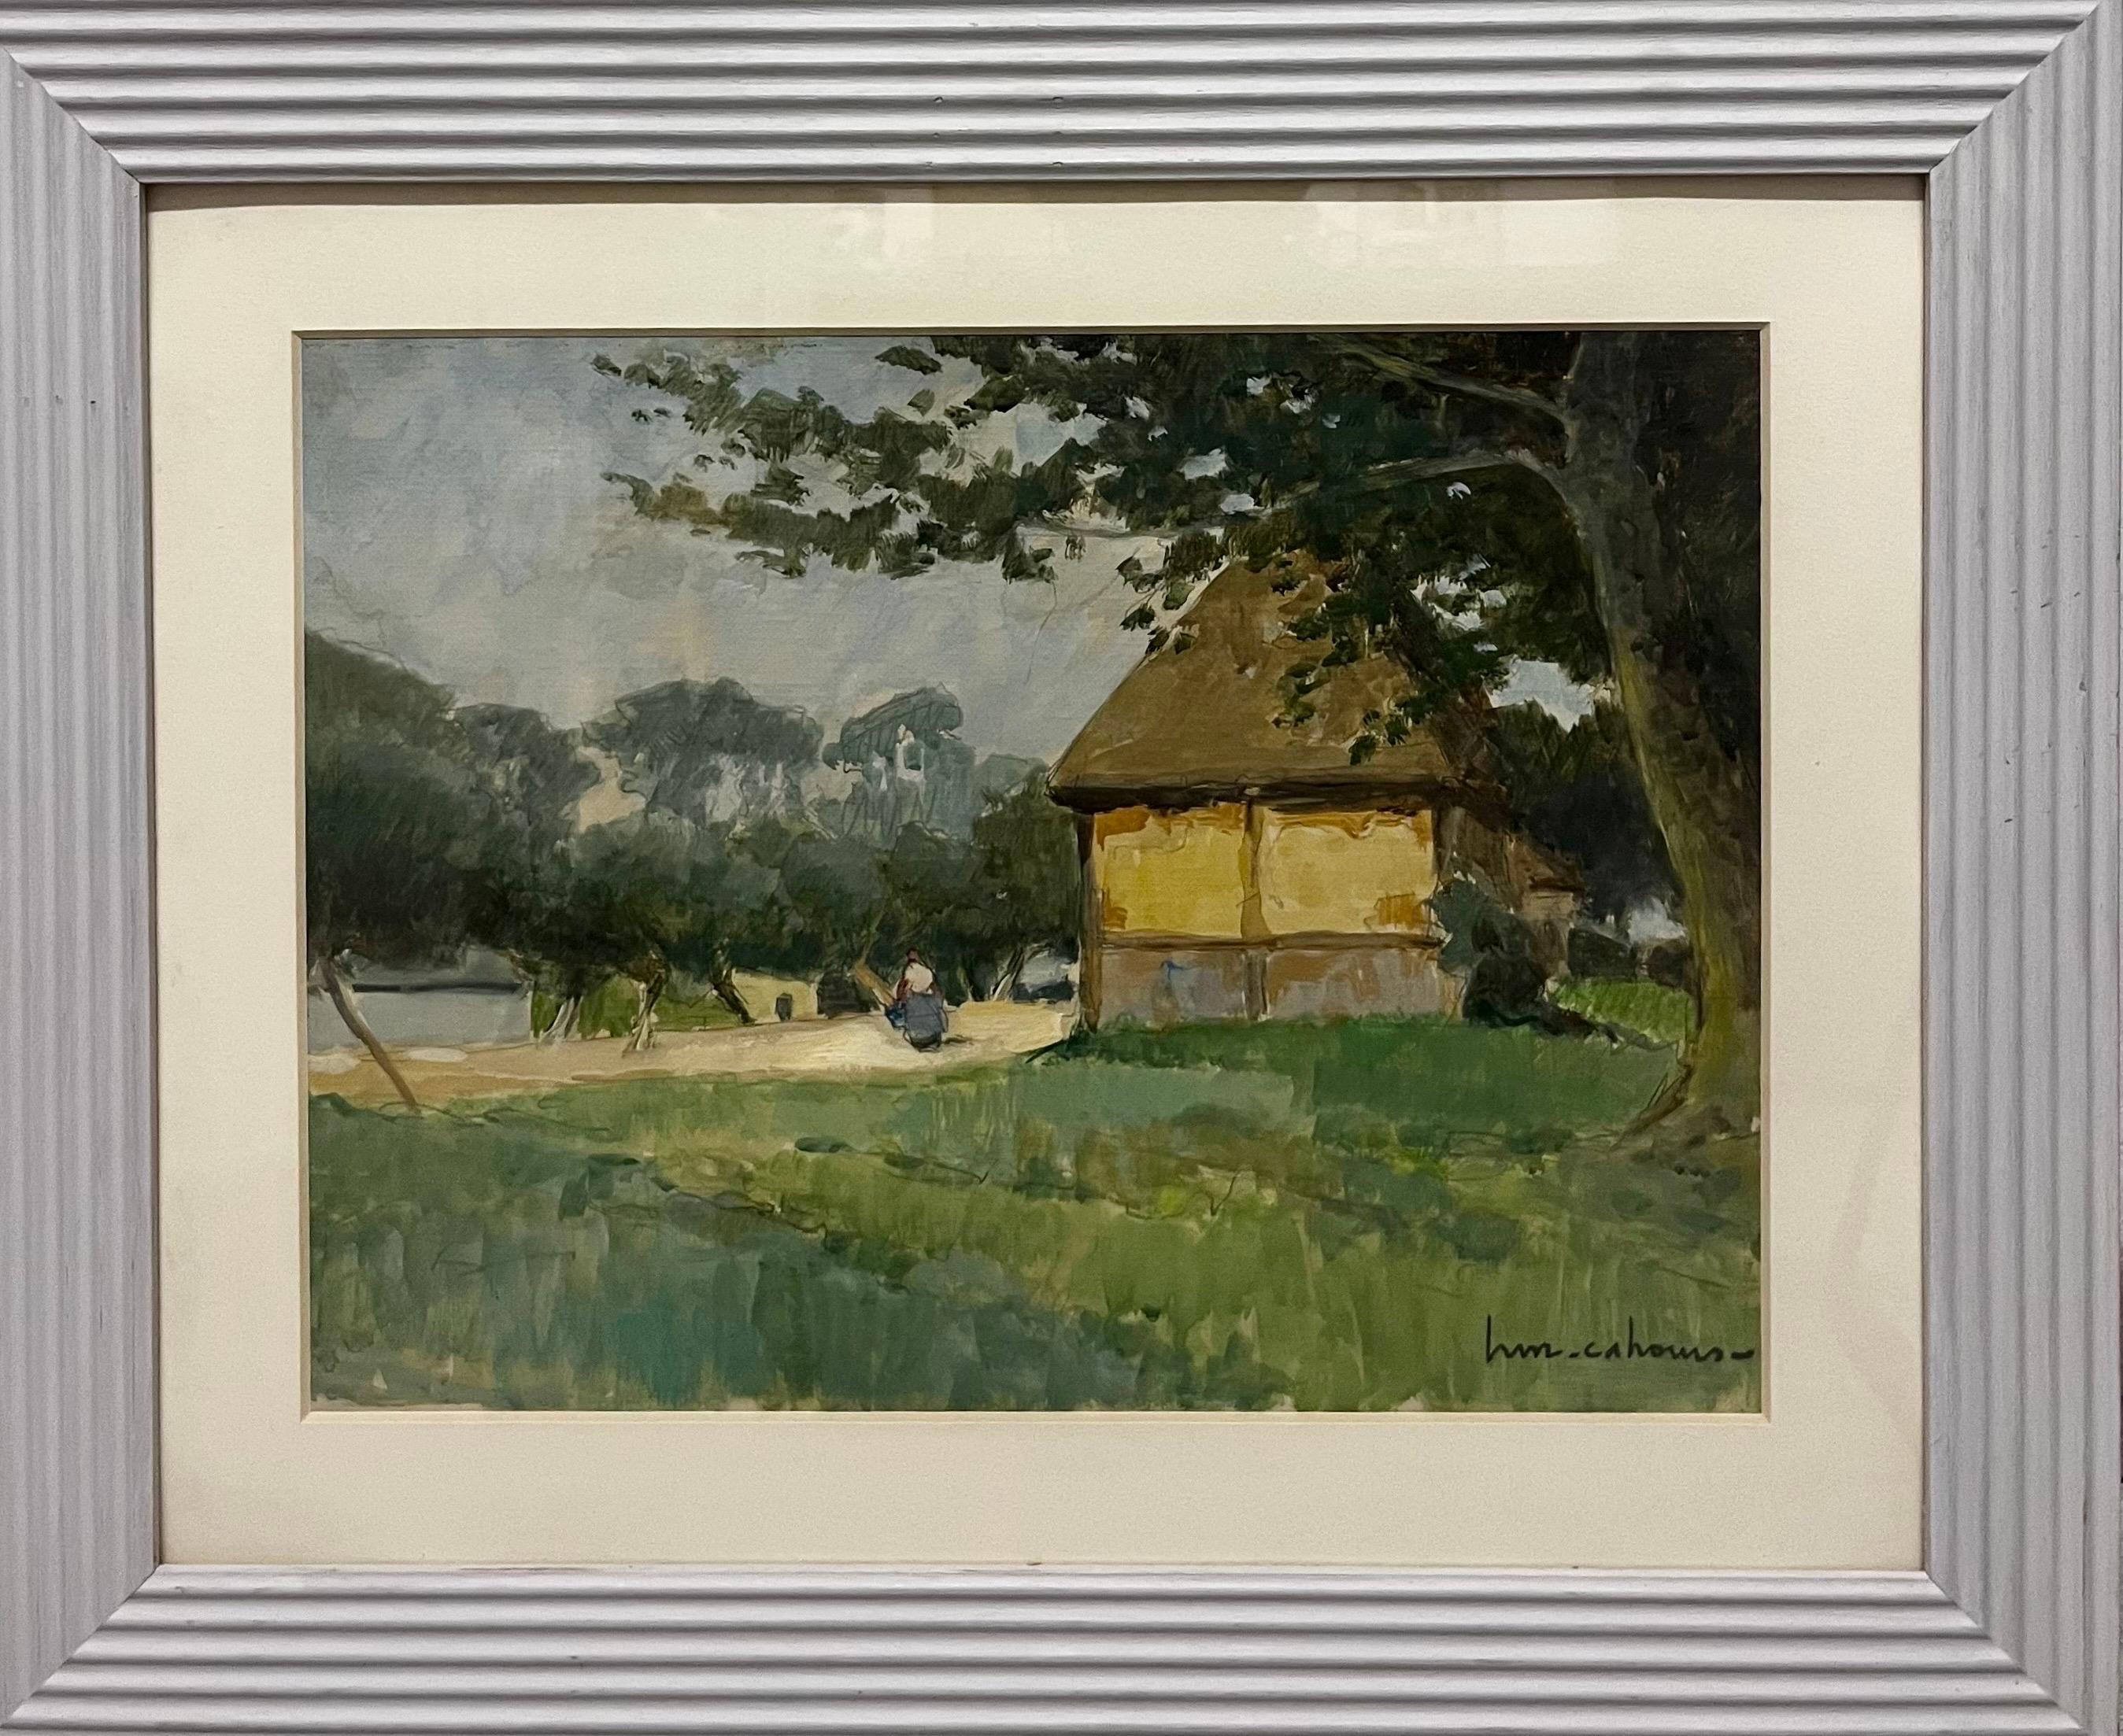 Henry Maurice CAHOURS Landscape Painting - "Ferme cauchaise"   Tempera  cm . 44 x 32  1930